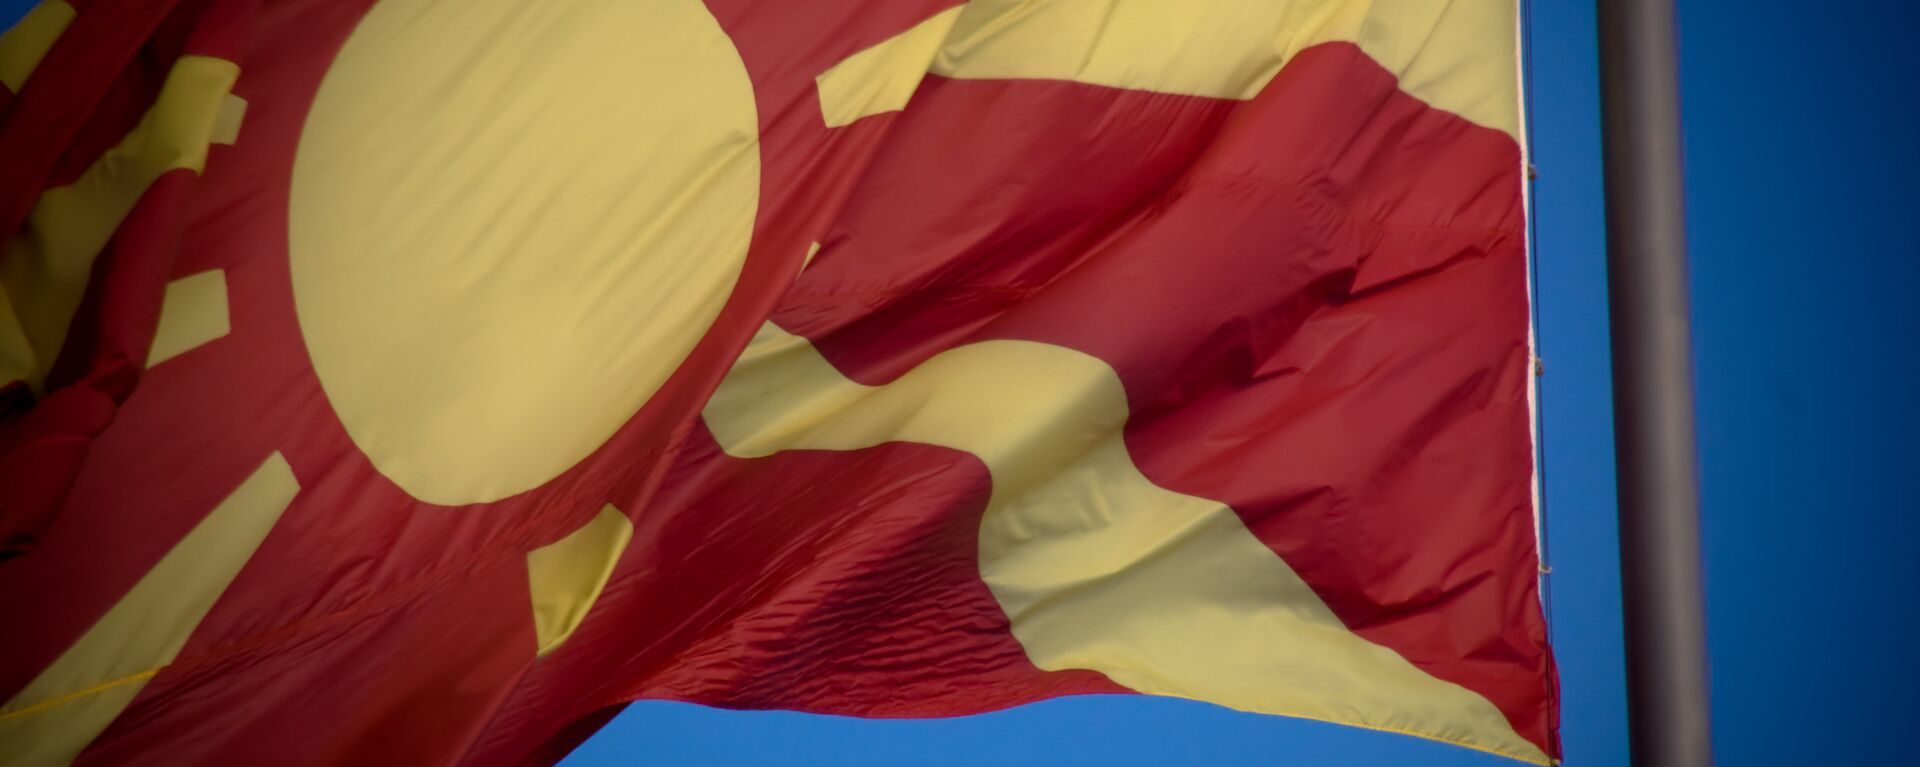 Bandera de Macedonia - Sputnik Mundo, 1920, 19.05.2021